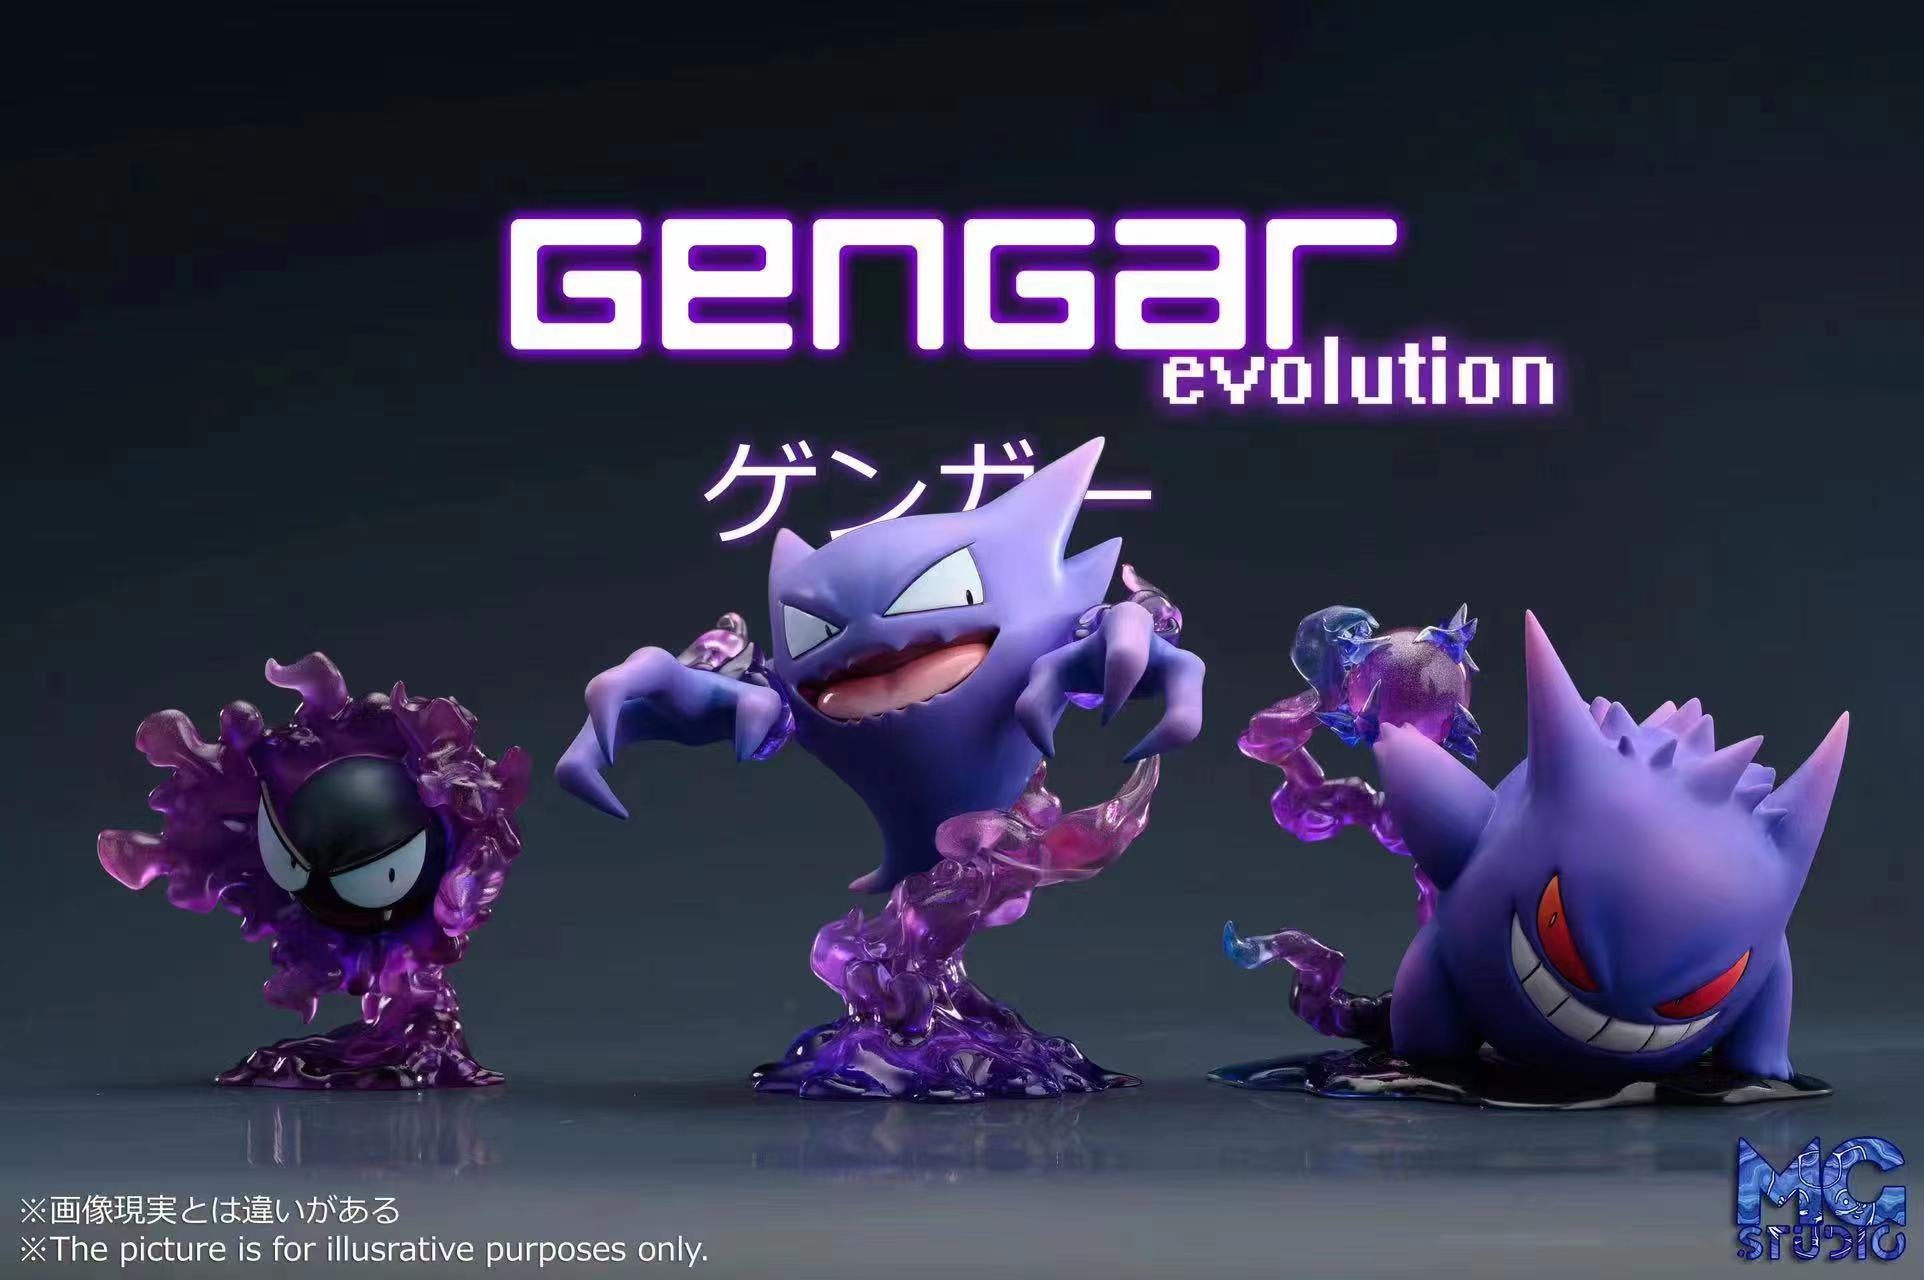 MG Studio - Gengar Family [6 Variants]